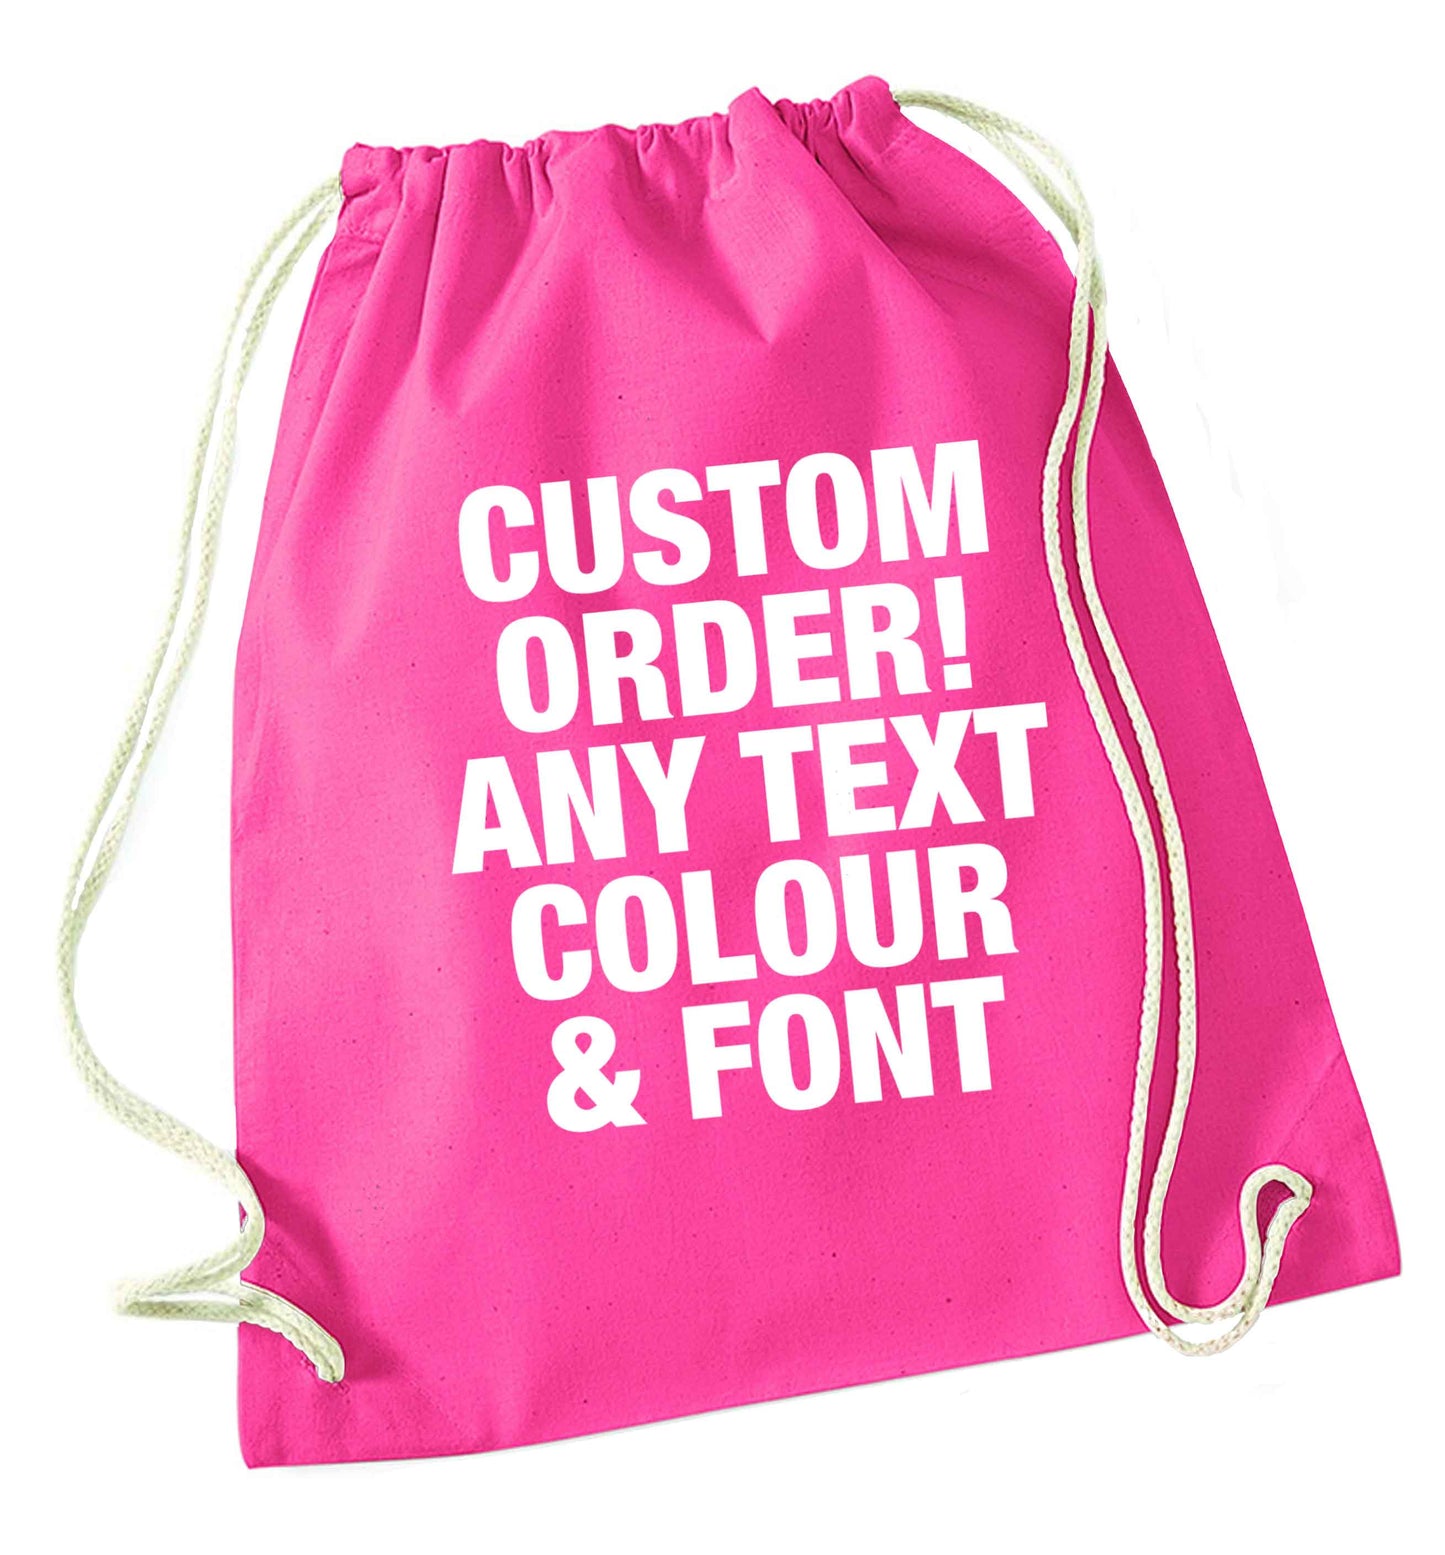 Custom order any text colour and font pink drawstring bag